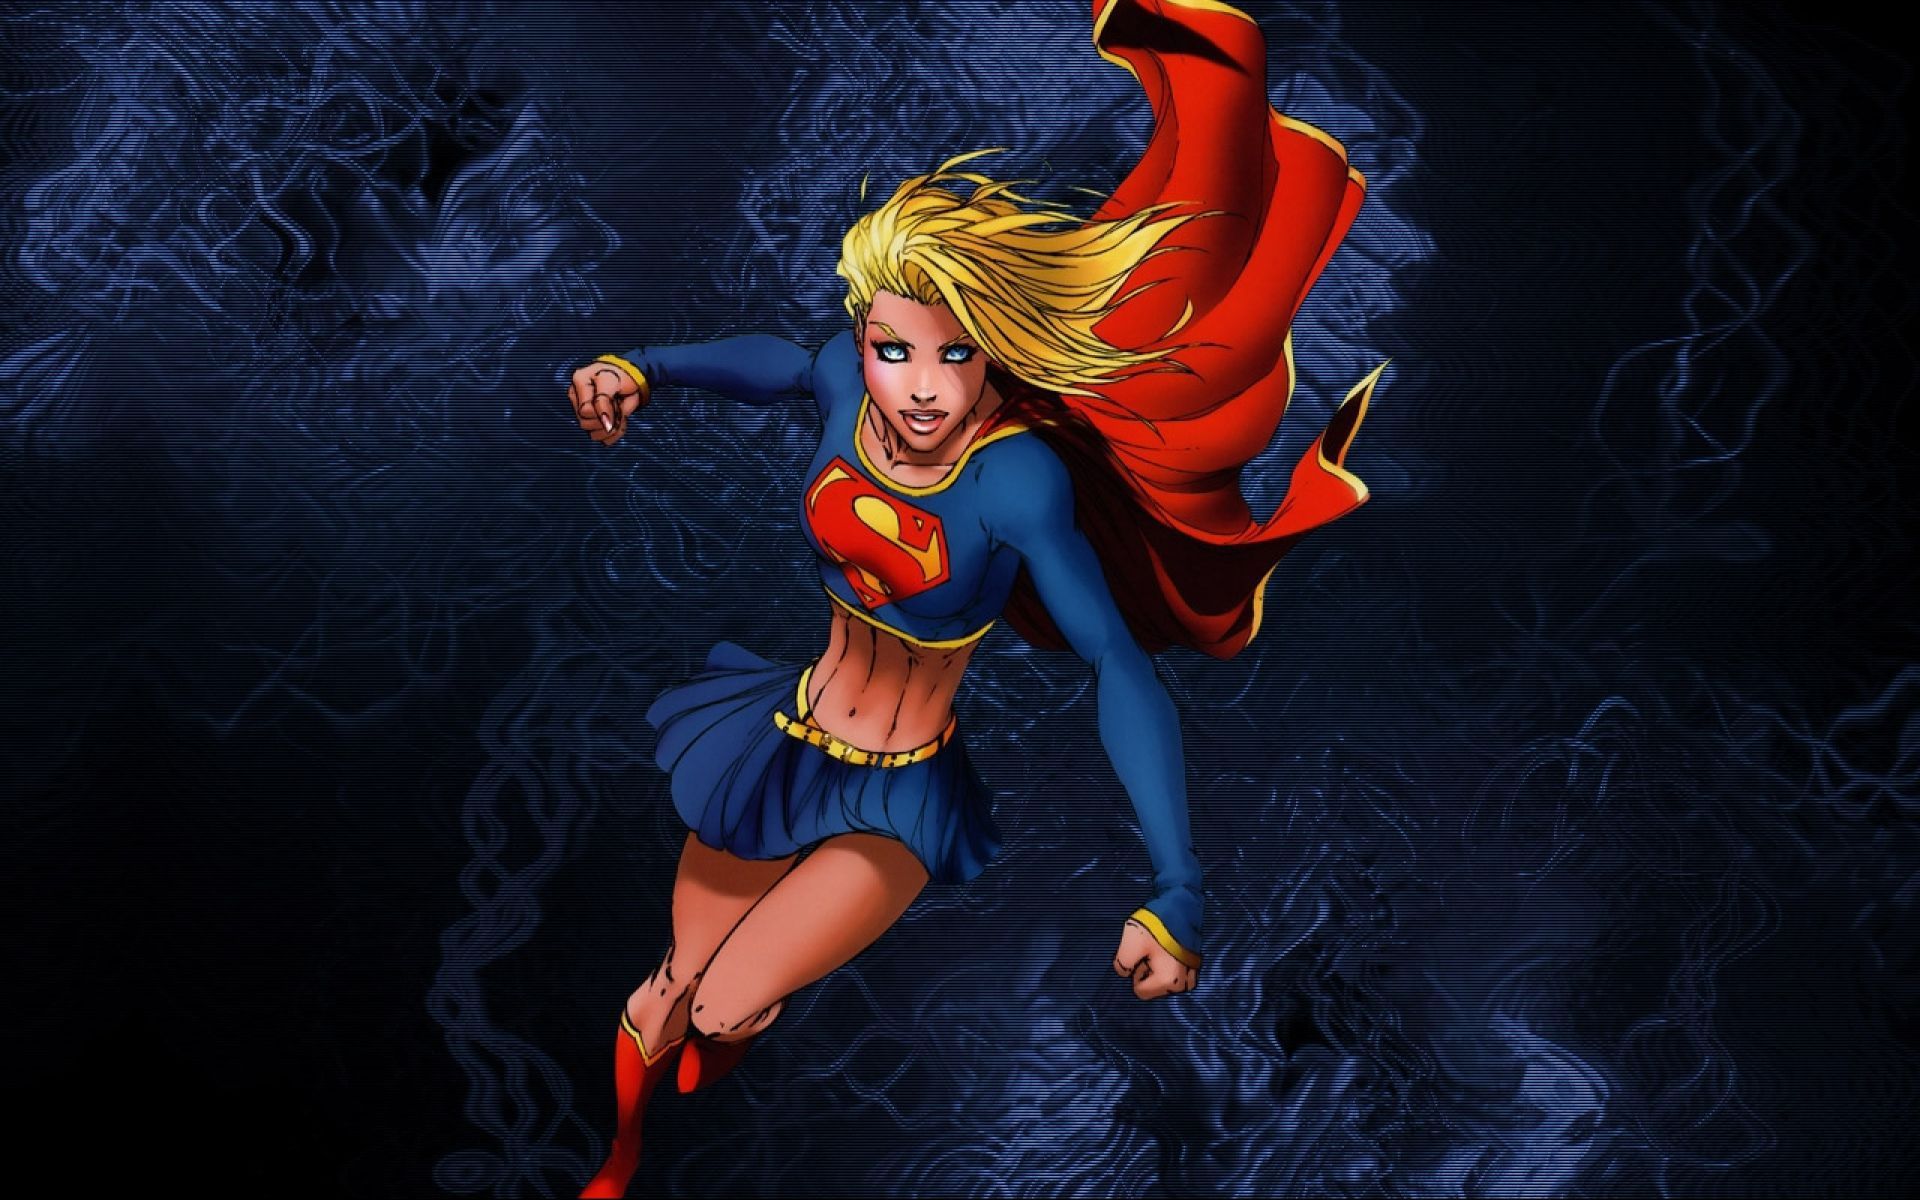 Superwoman Background. Superwoman Wallpaper, Black Superwoman Wallpaper and Superwoman Wallpaper iPhone